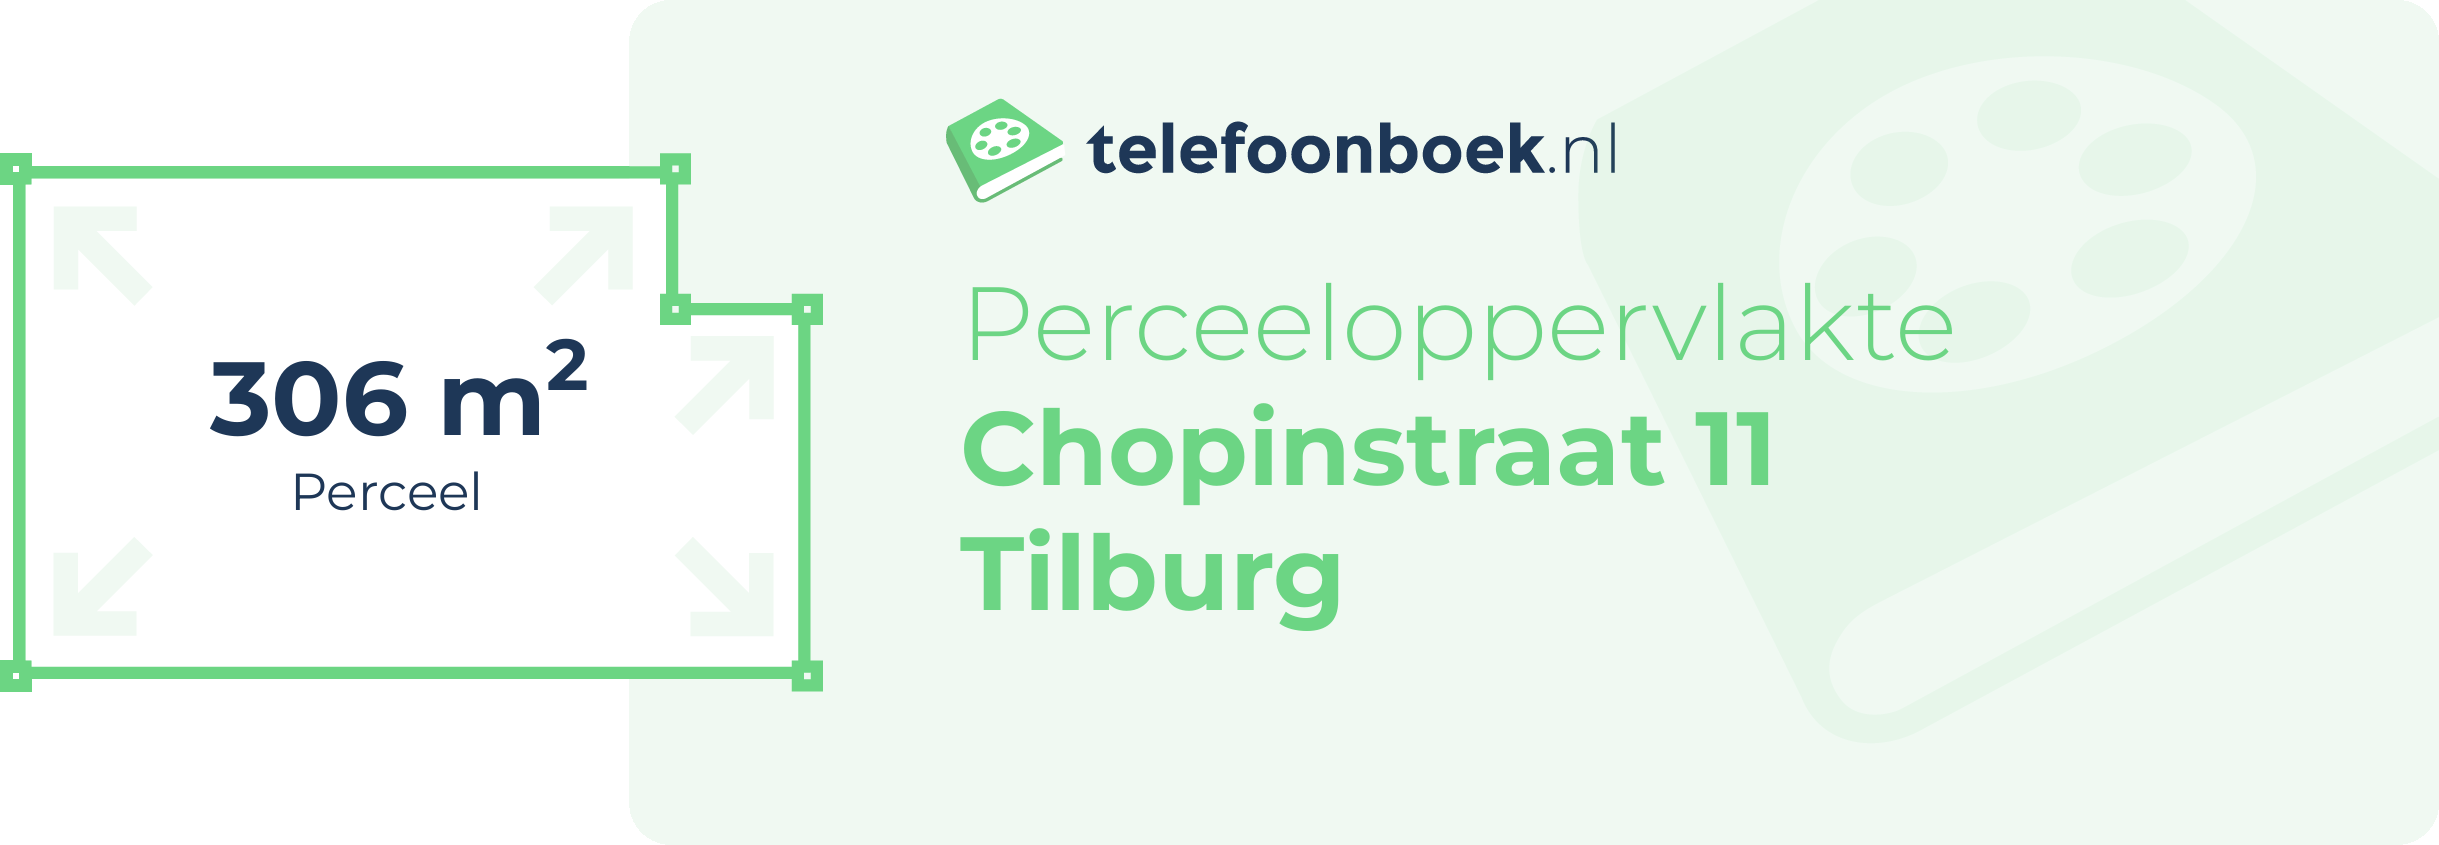 Perceeloppervlakte Chopinstraat 11 Tilburg